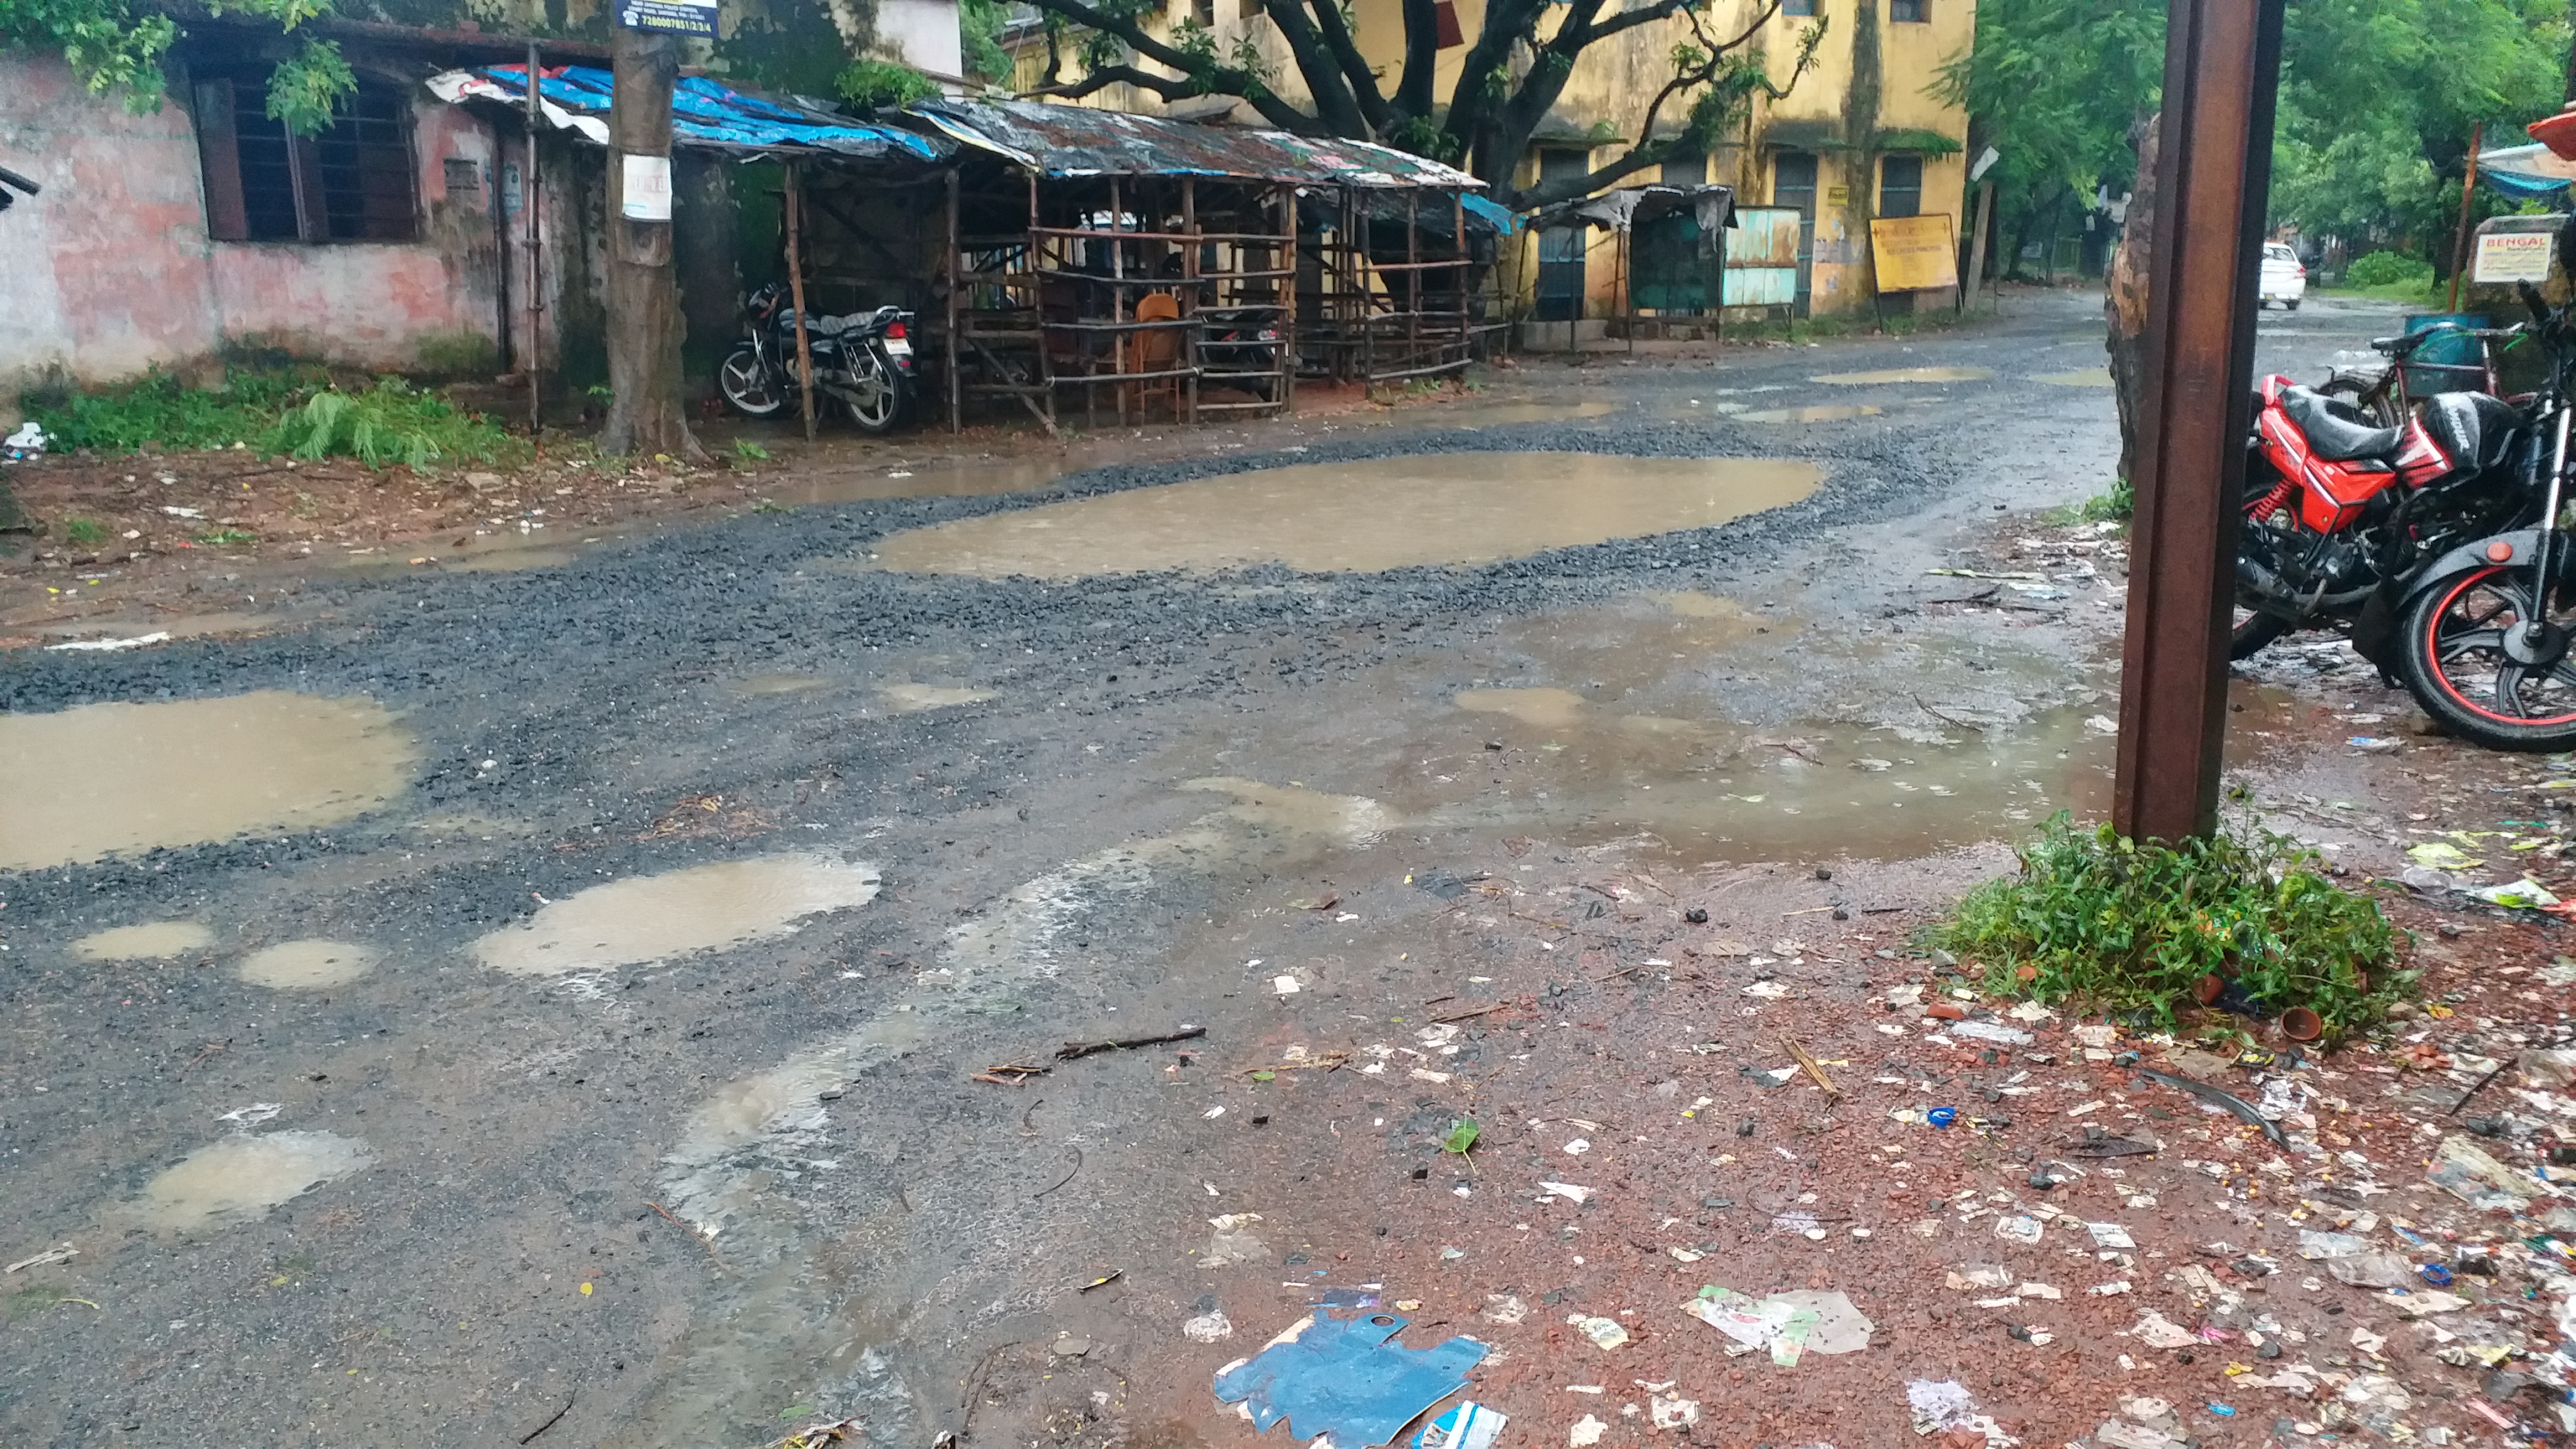 potholes on the road after heavy rain